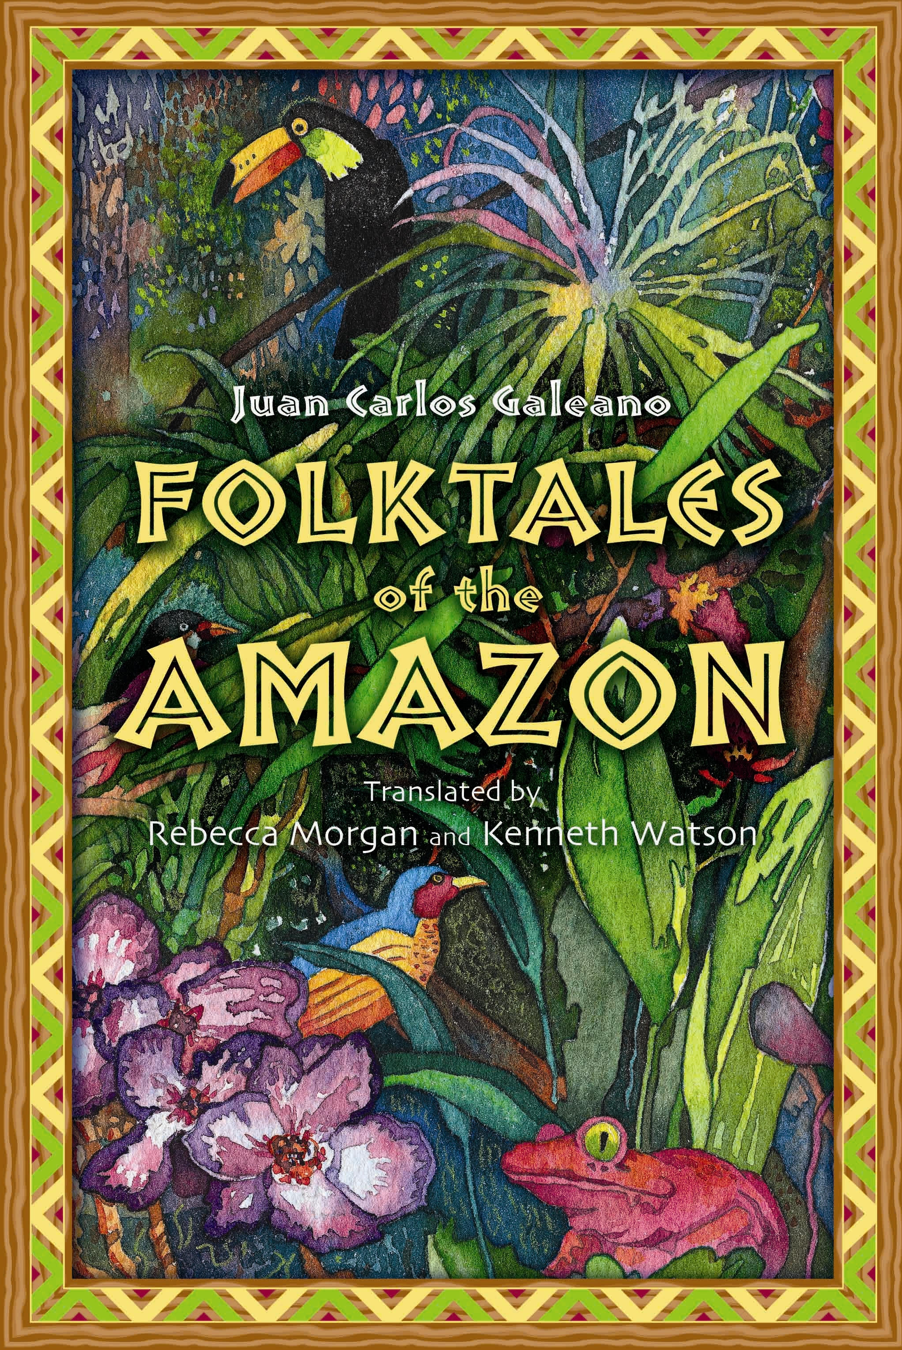 Folktales_AmazonPic2.png